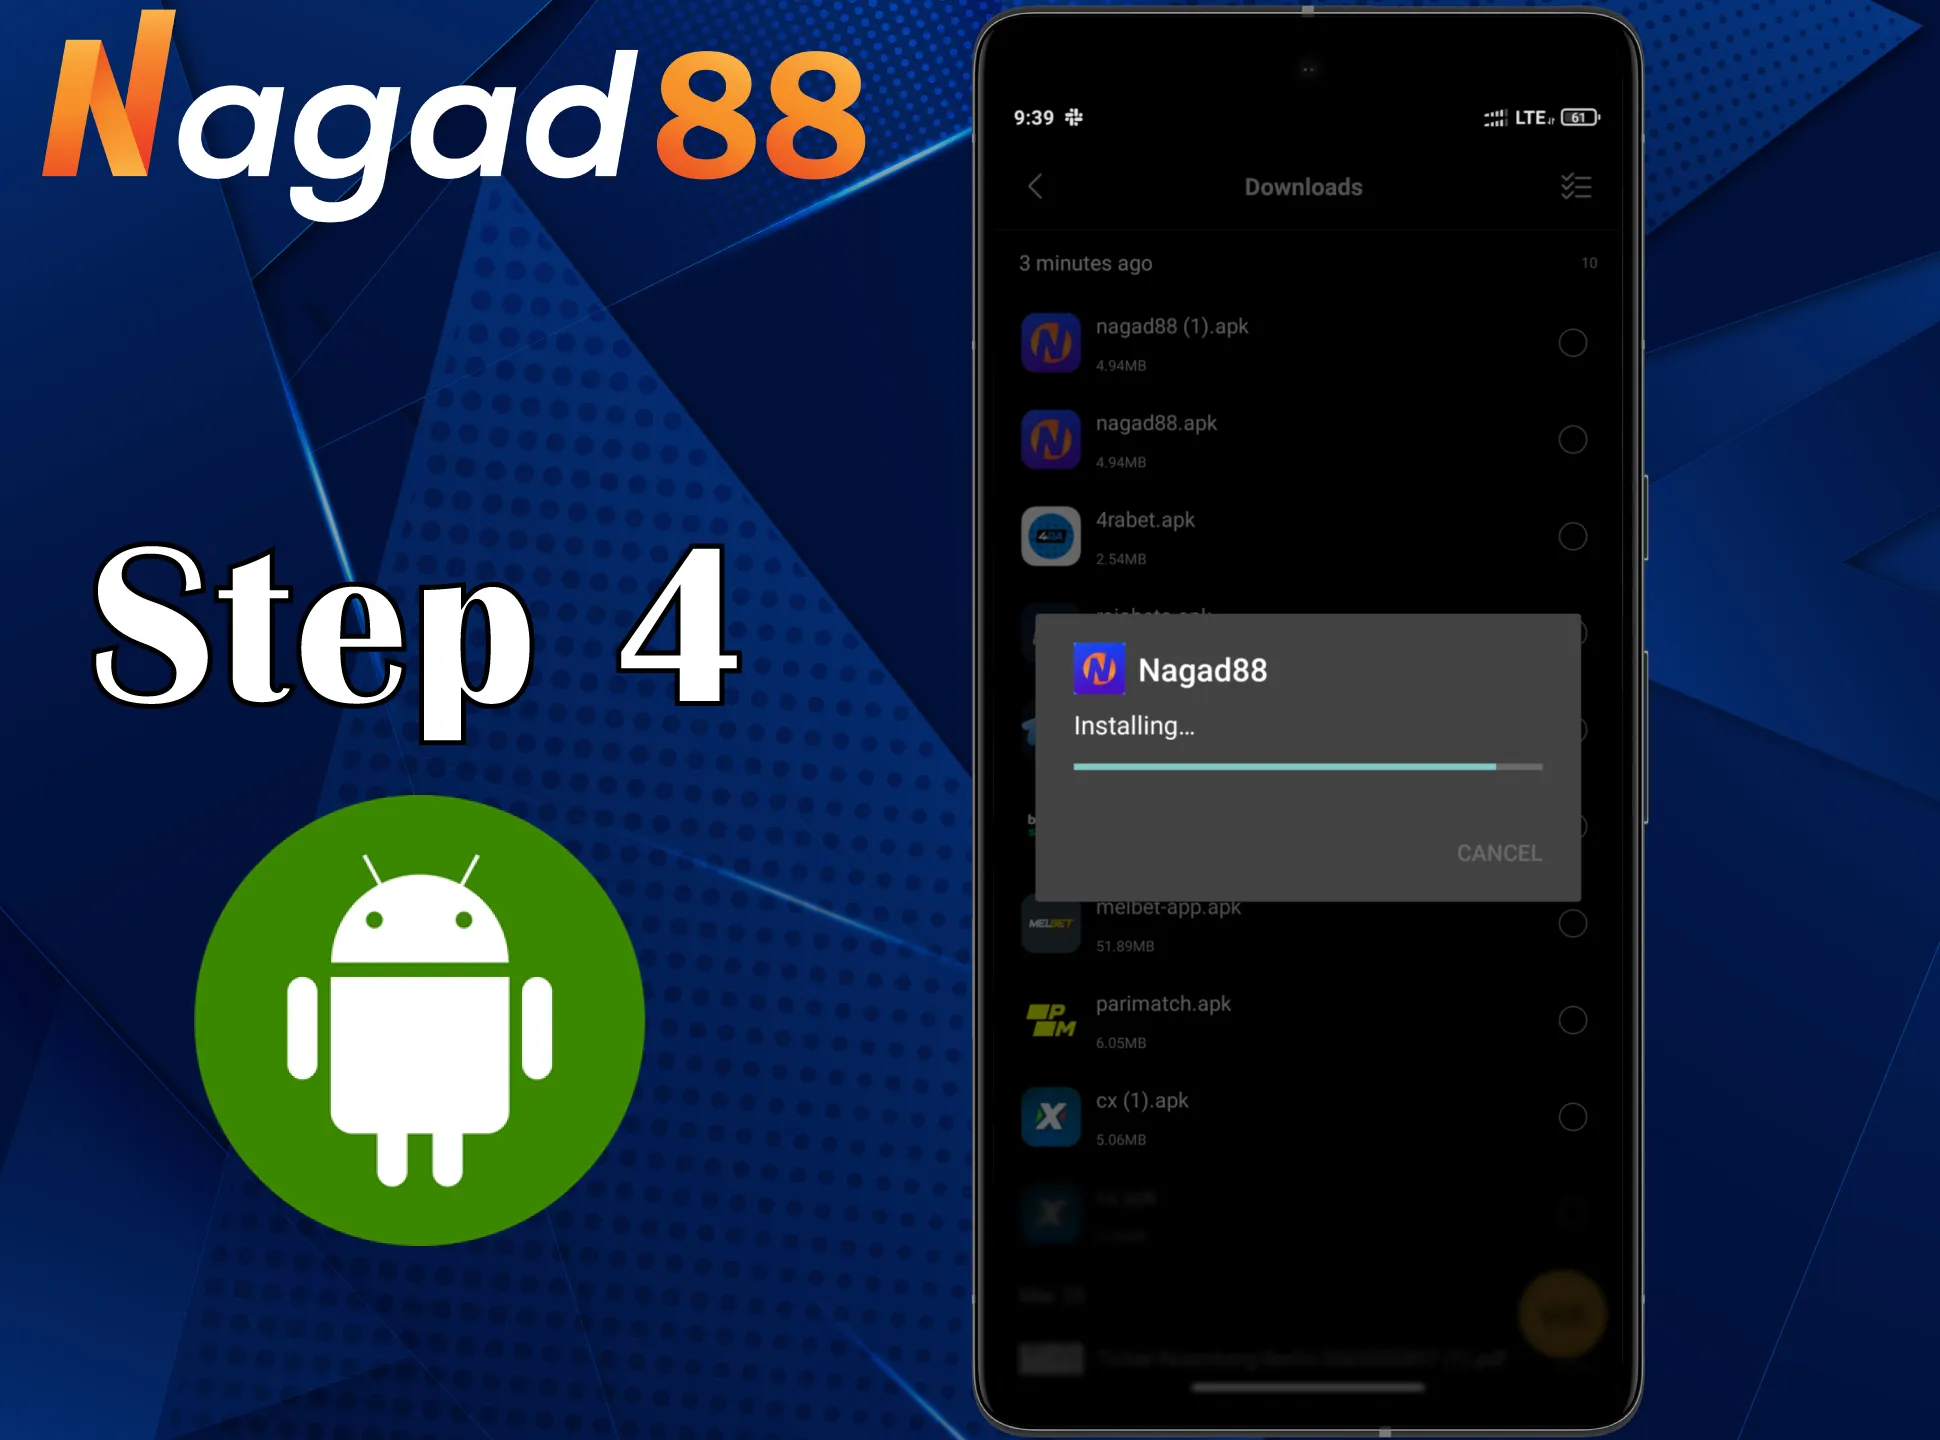 Confirm installation of the Nagad88 app.